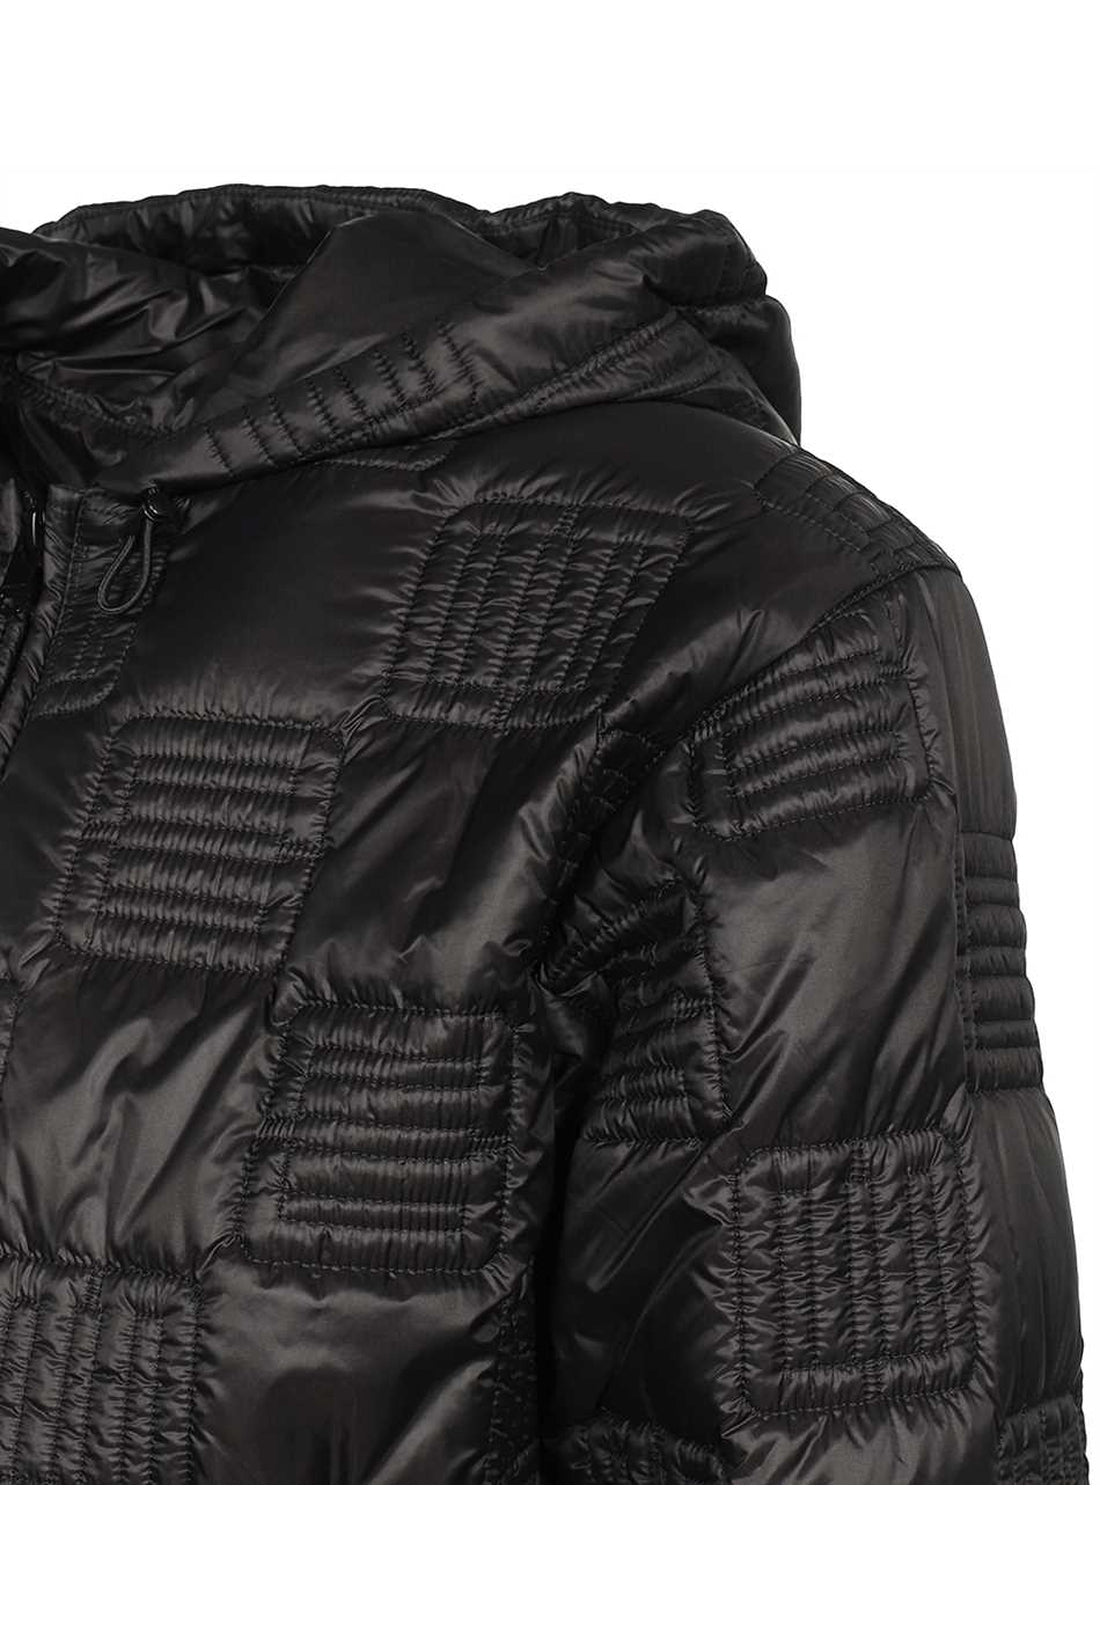 AMBUSH-OUTLET-SALE-Hooded full-zip down jacket-ARCHIVIST